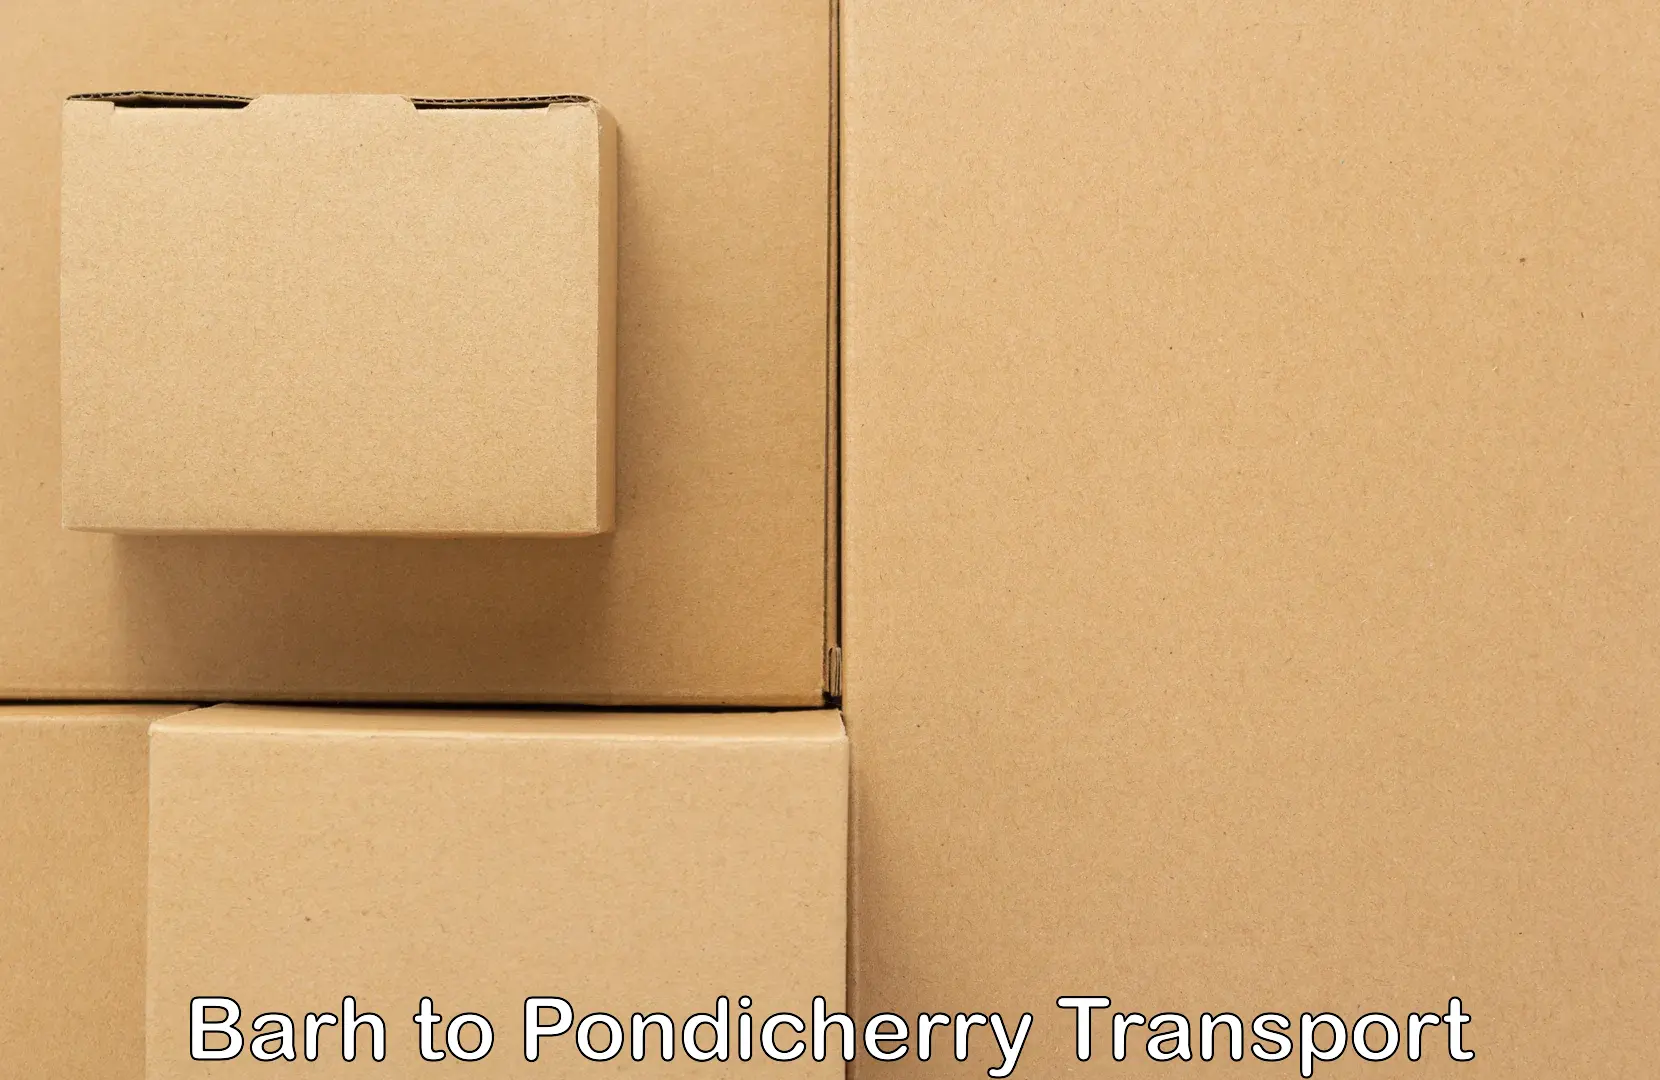 Two wheeler parcel service in Barh to Pondicherry